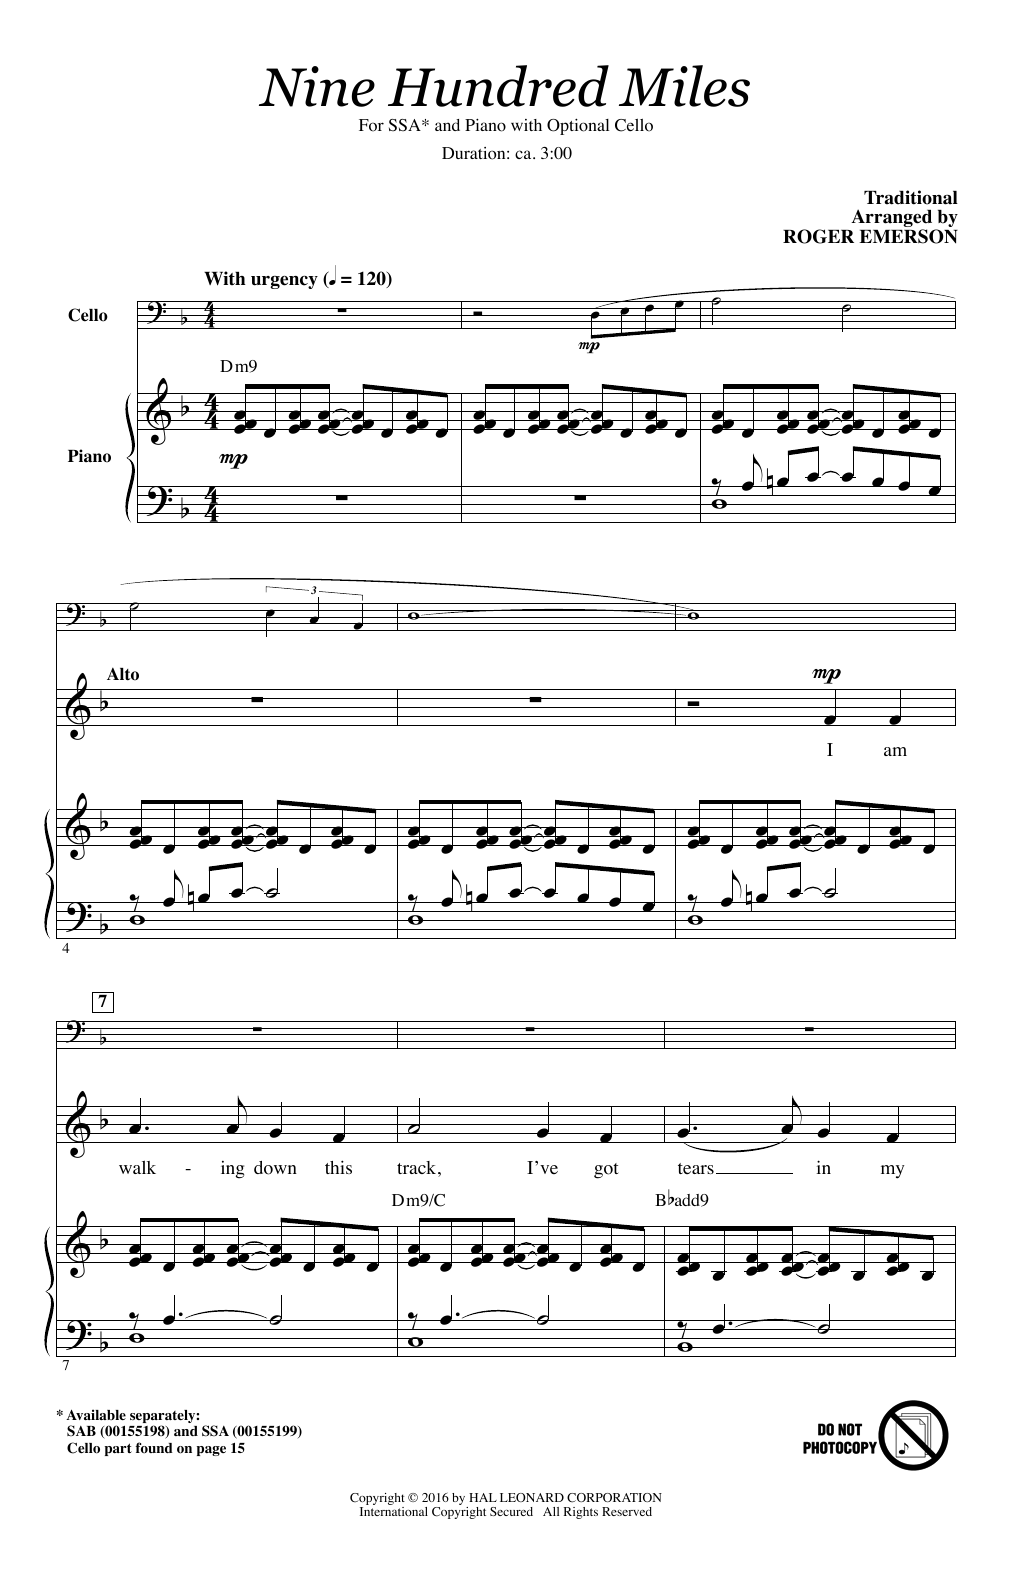 Roger Emerson Nine Hundred Miles Sheet Music Notes & Chords for SAB - Download or Print PDF